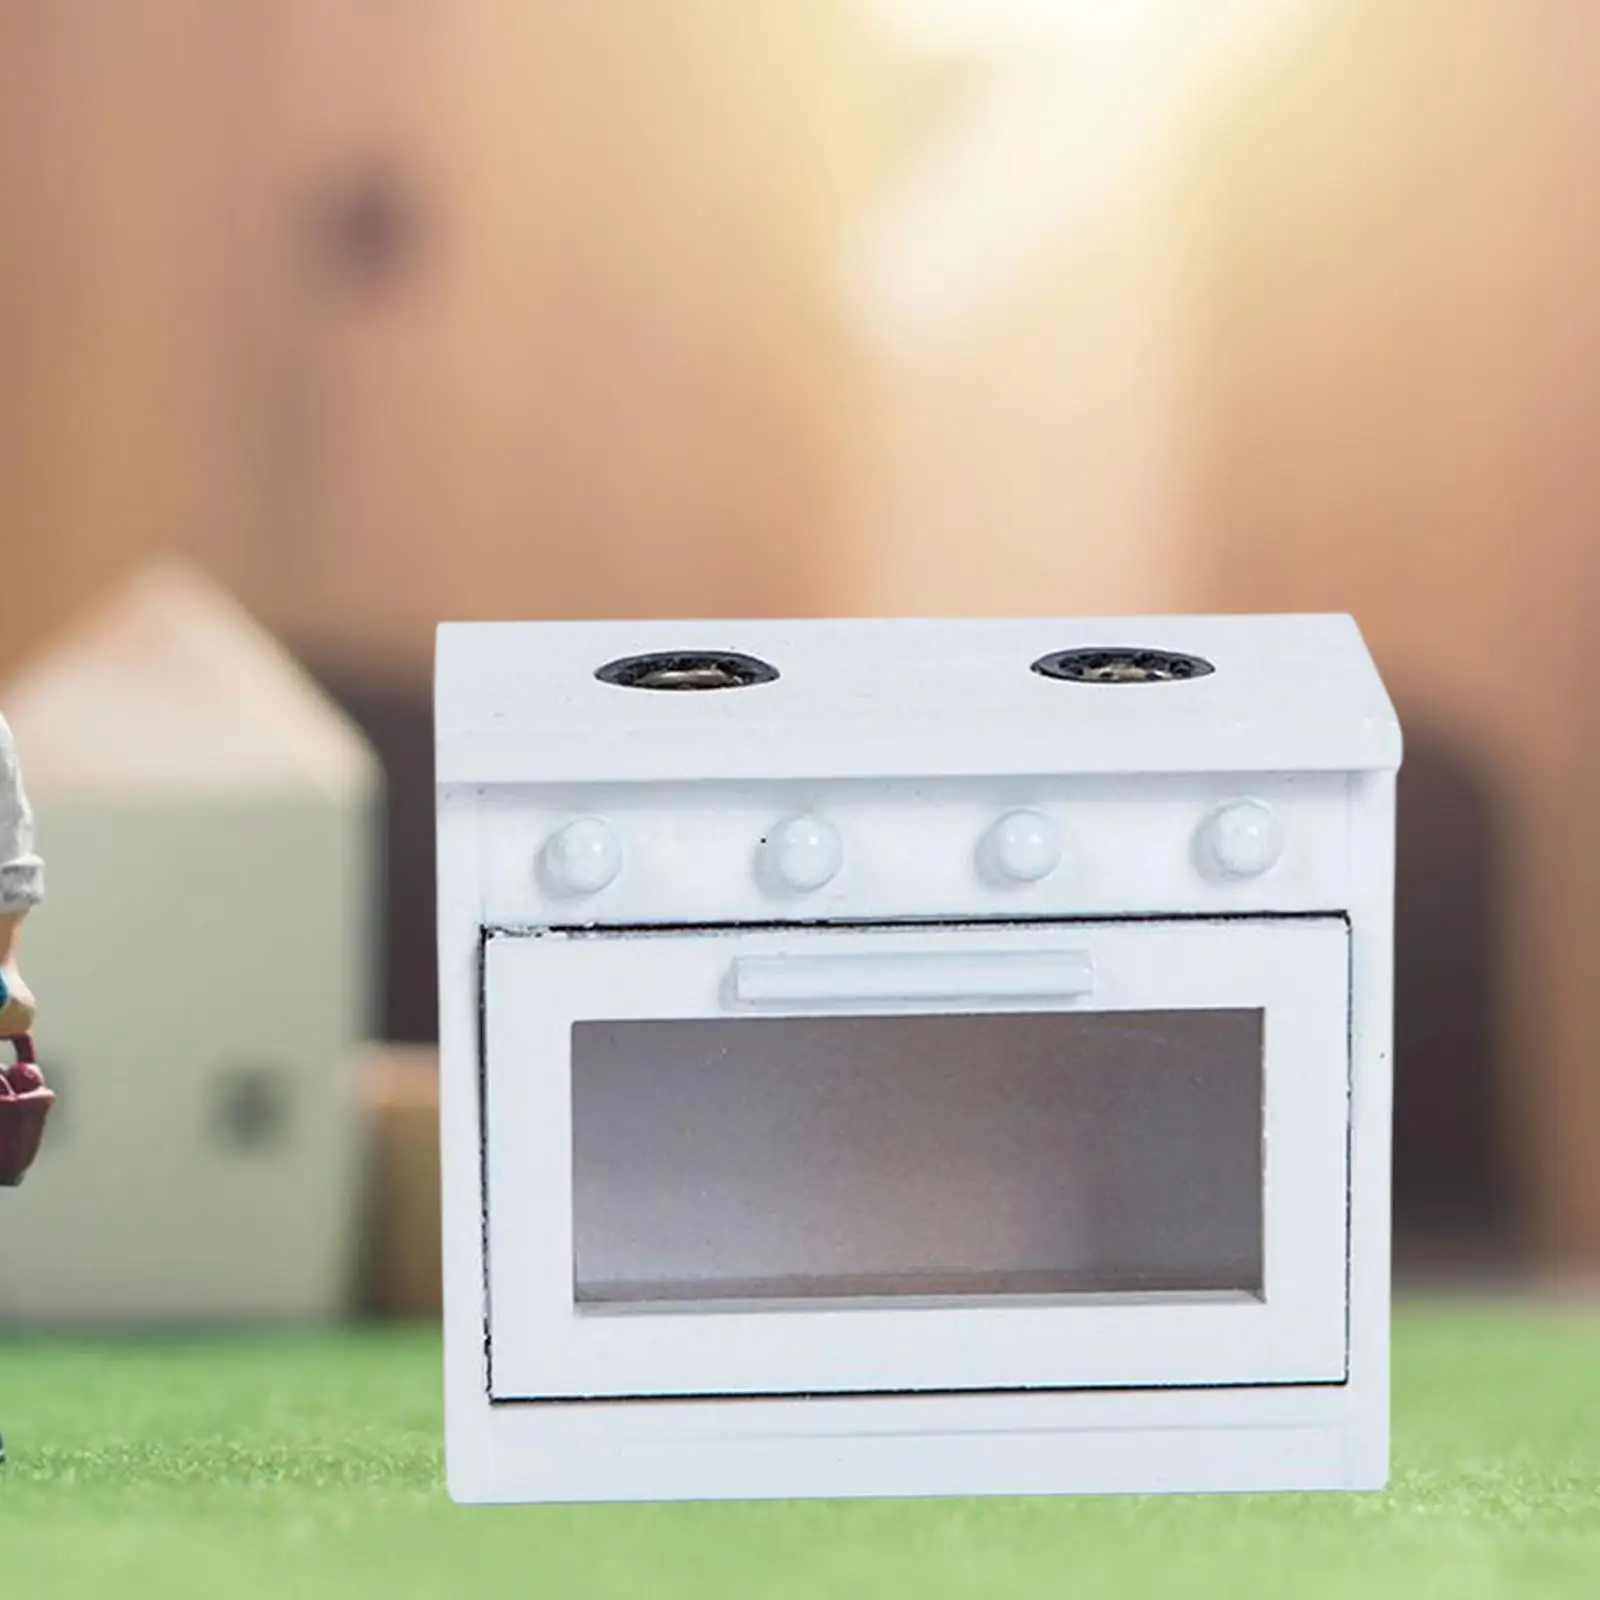 1 12 Scale Dollhouse Mini Stove Kitchen Appliance Model DIY Toy Life Scene Decor